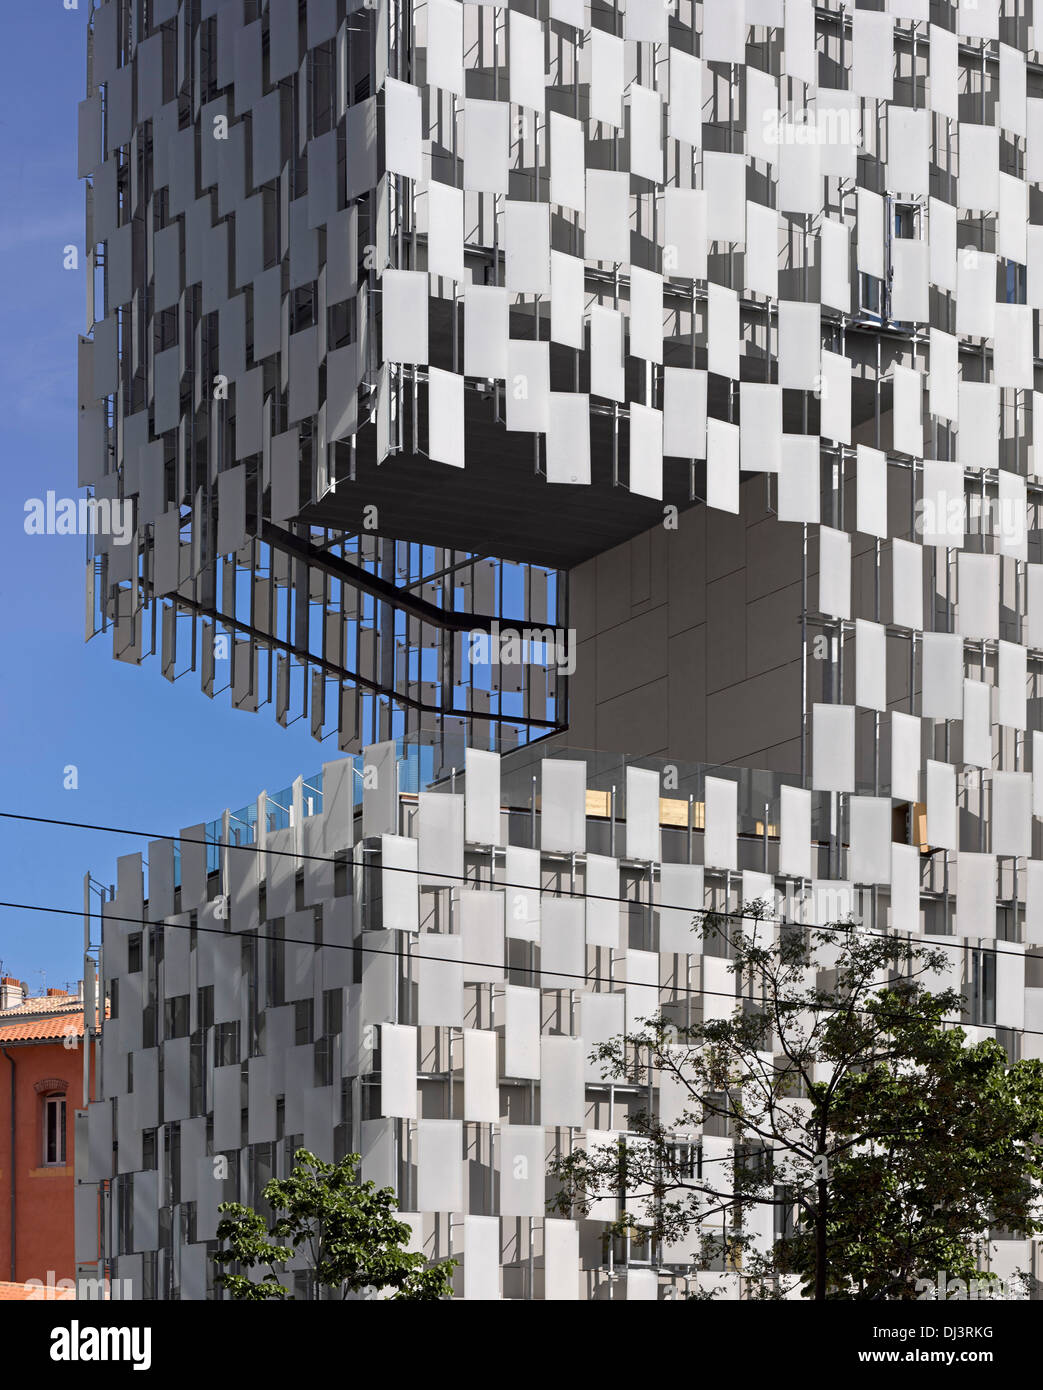 FRAC, Marseille, France. Architect: Kengo Kuma, 2013. Facade showing balcony. Stock Photo